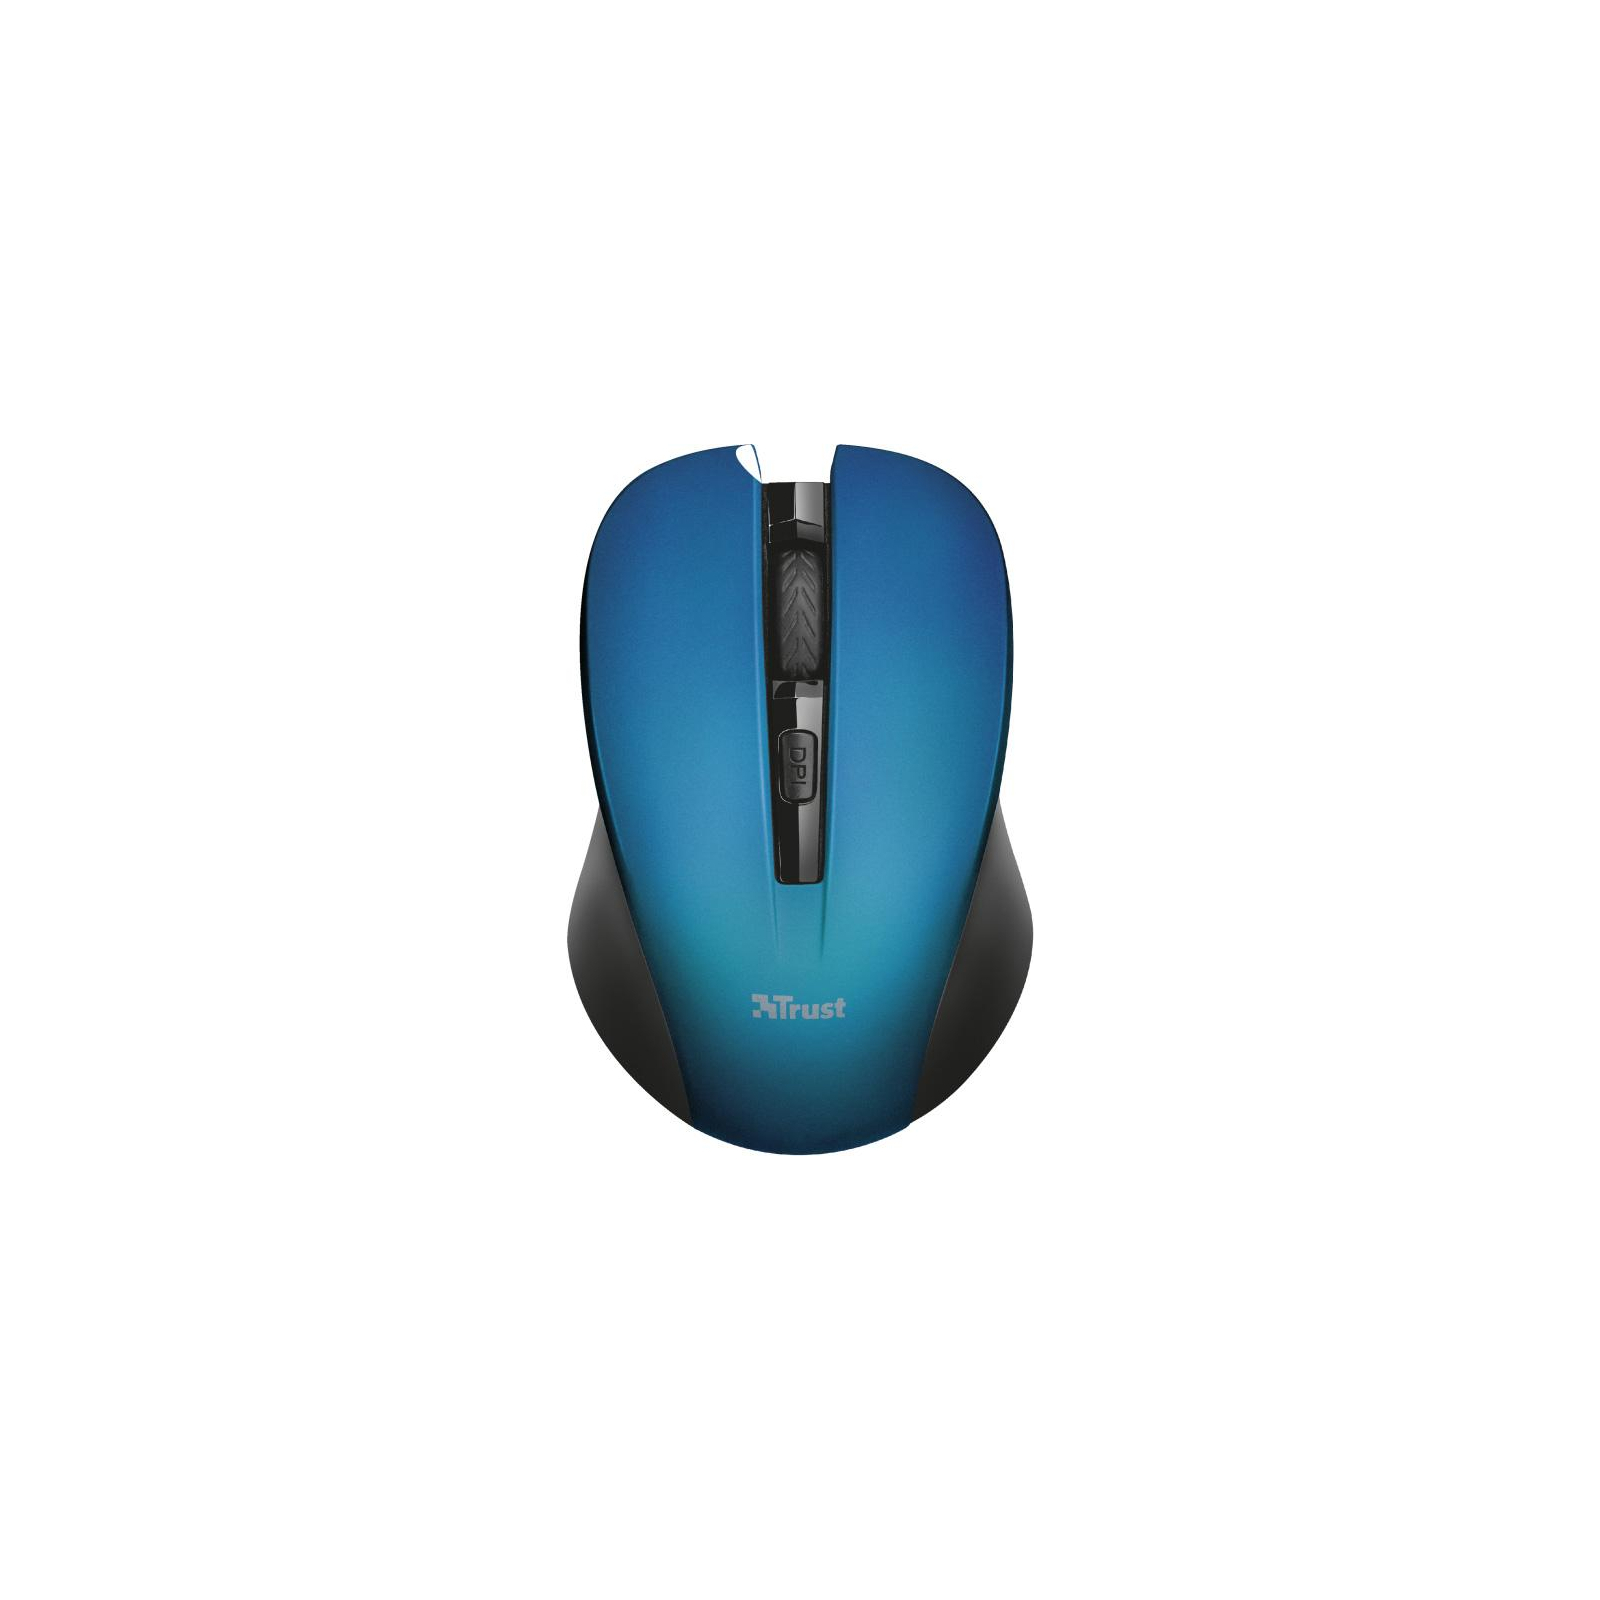 Мышка Trust Mydo Silent wireless mouse blue (21870) изображение 2